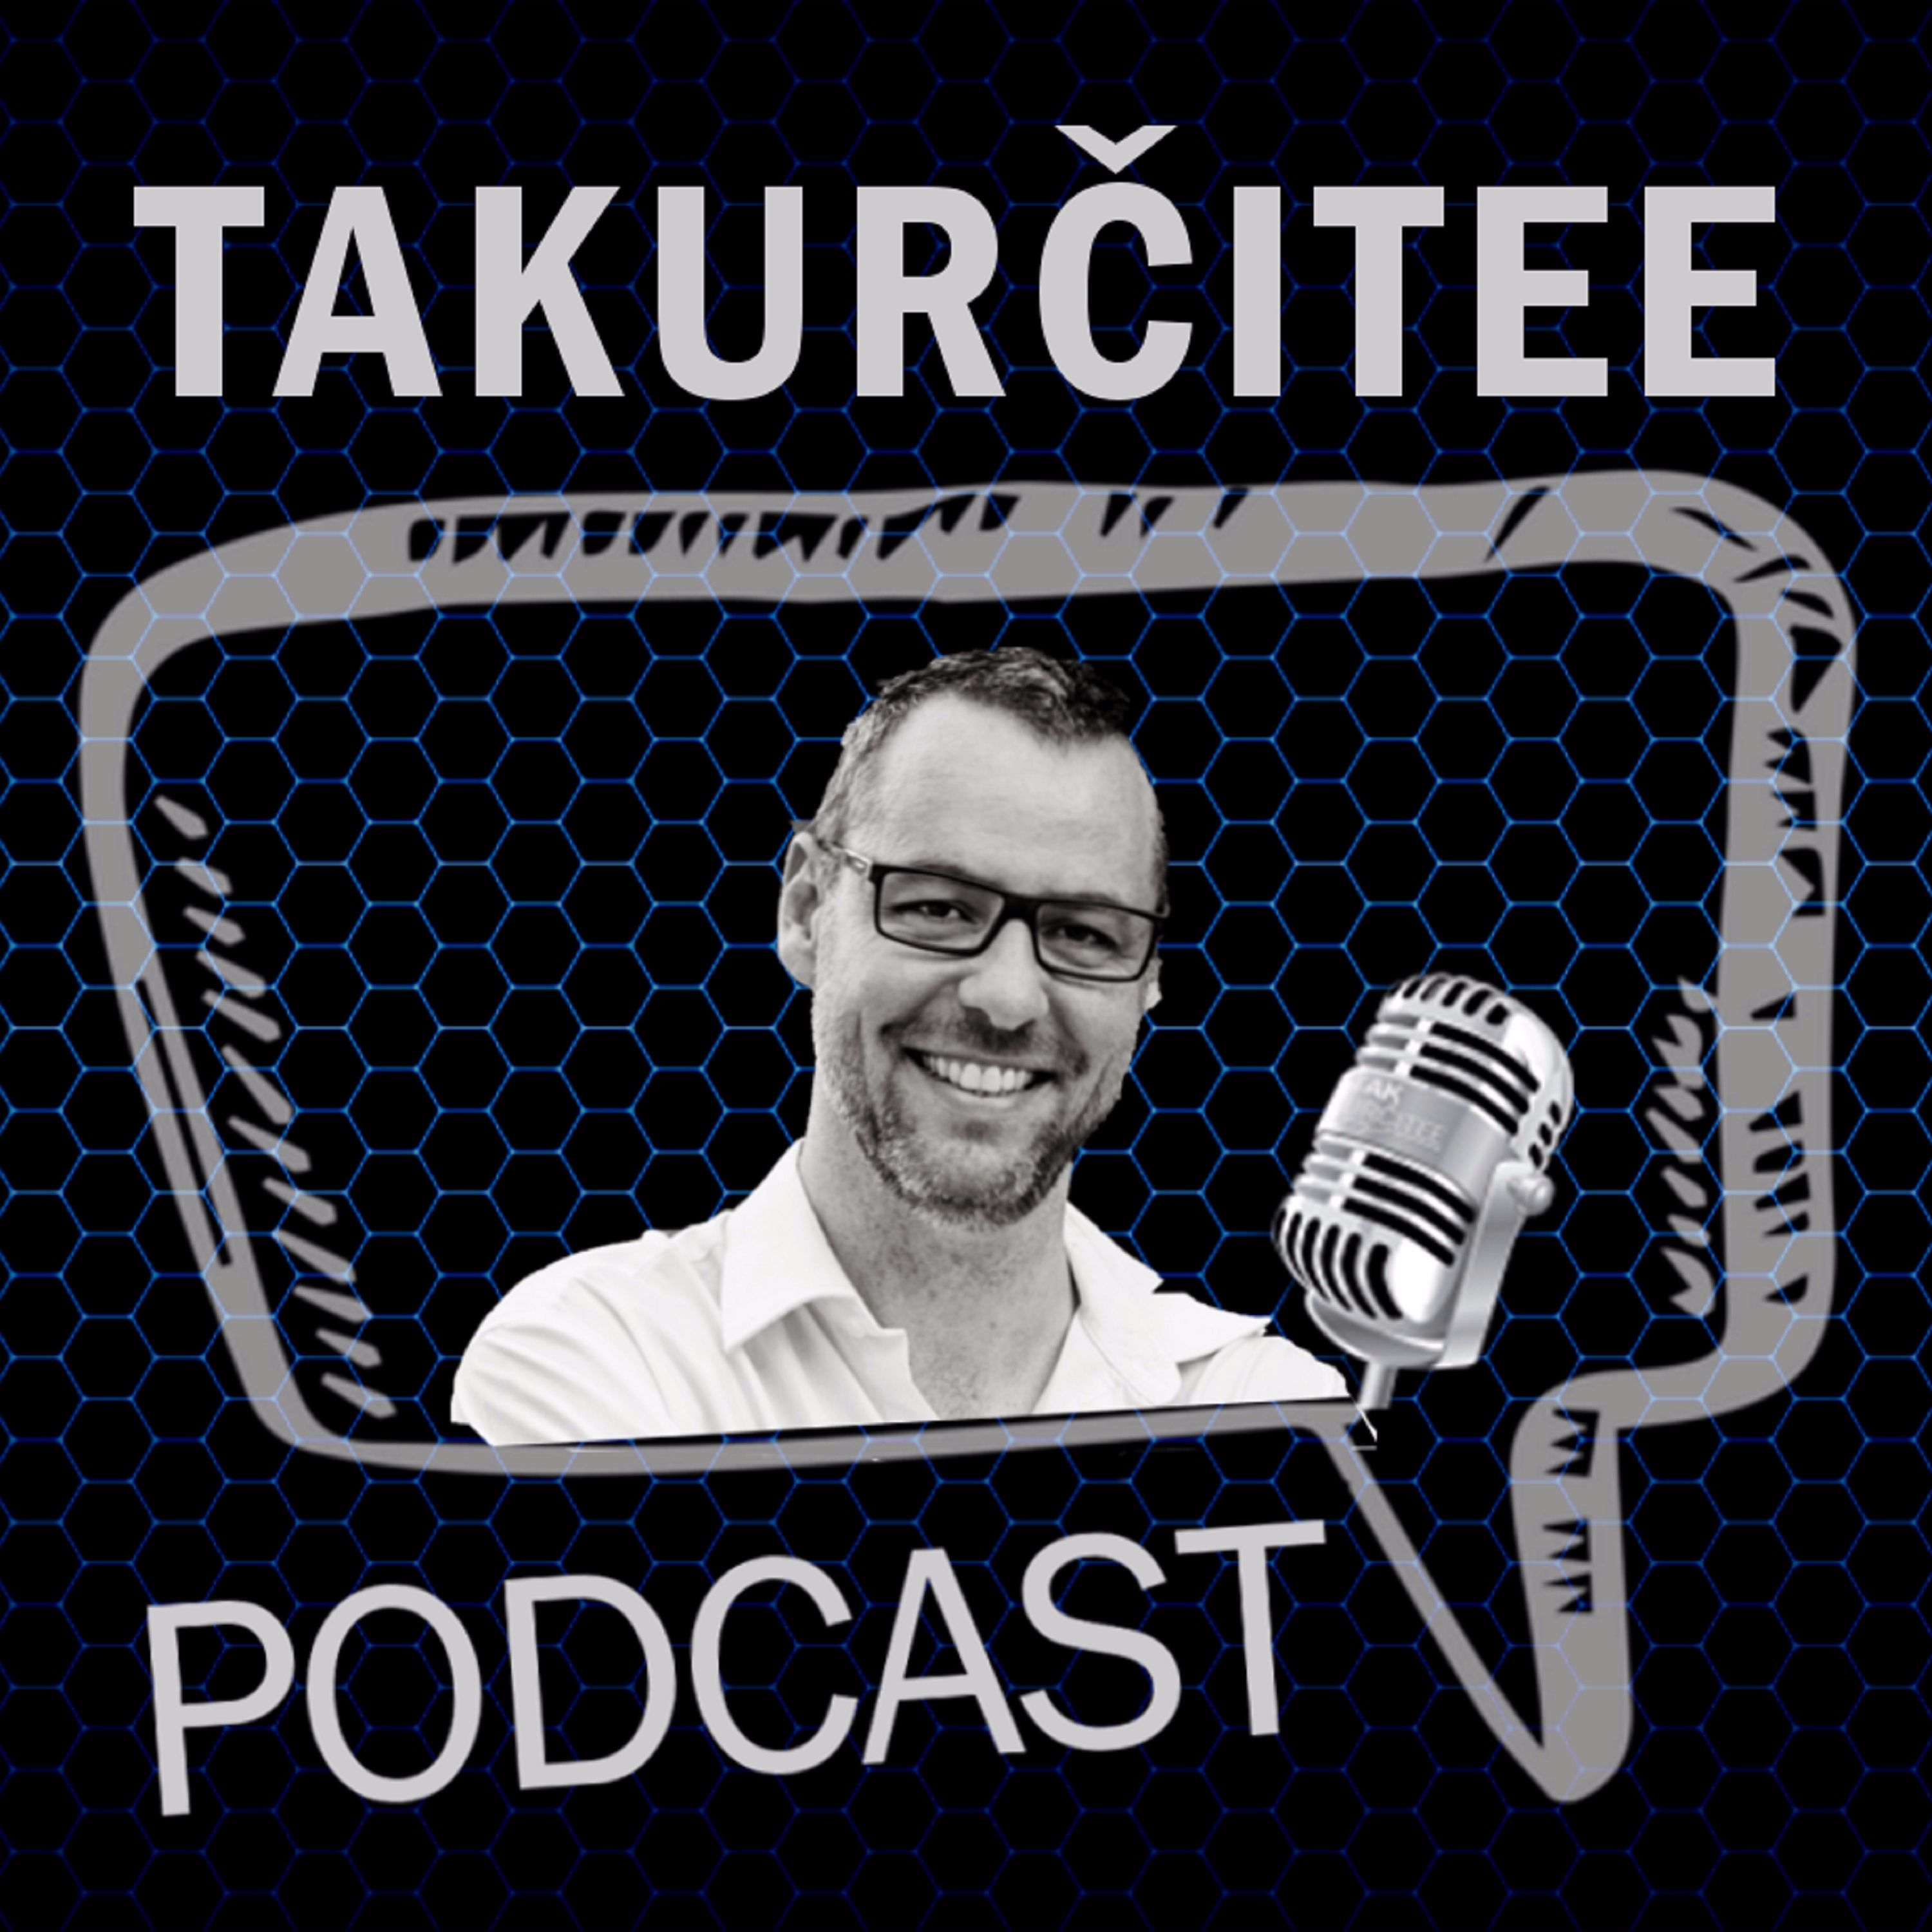 TakUrčitee Podcast, Ep. 45: Premier league a žreb MS 2018